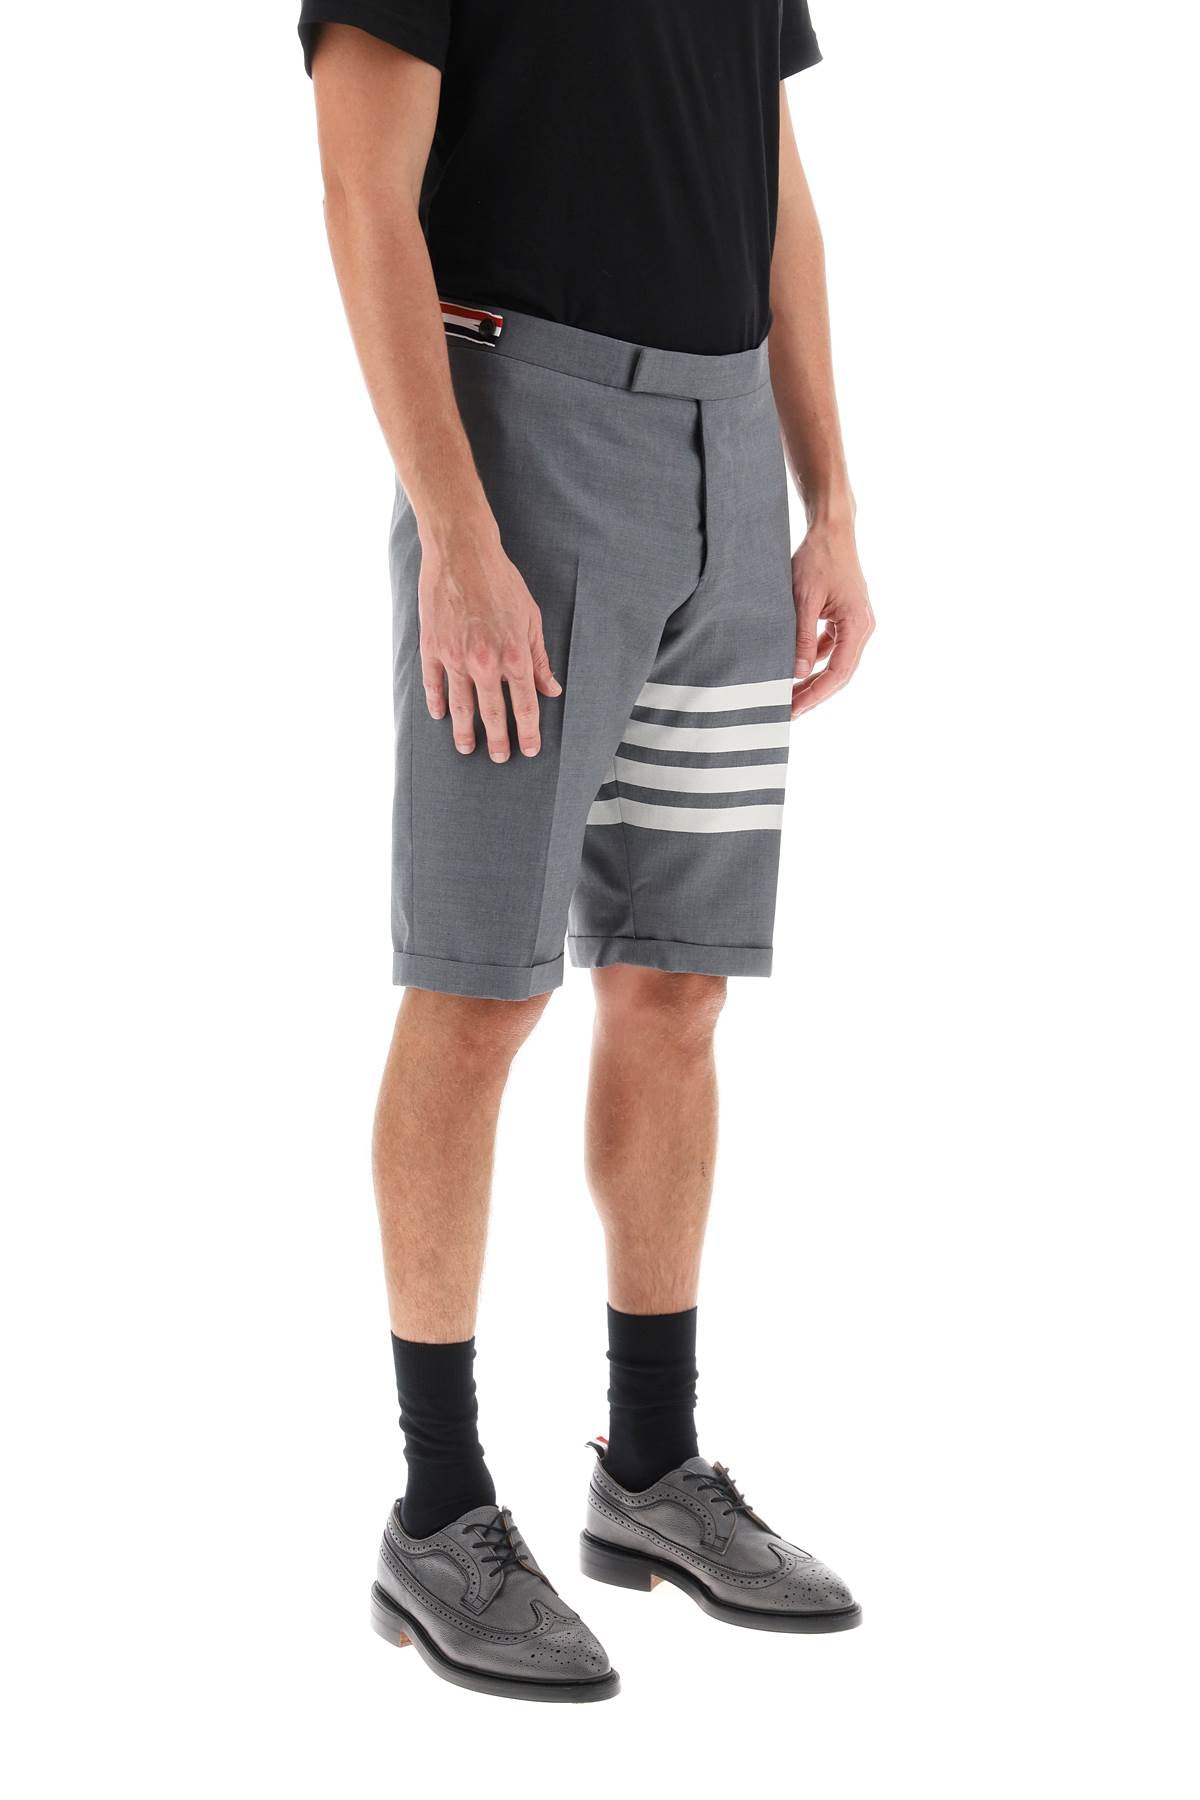 Thom browne 4-bar shorts in light wool-1